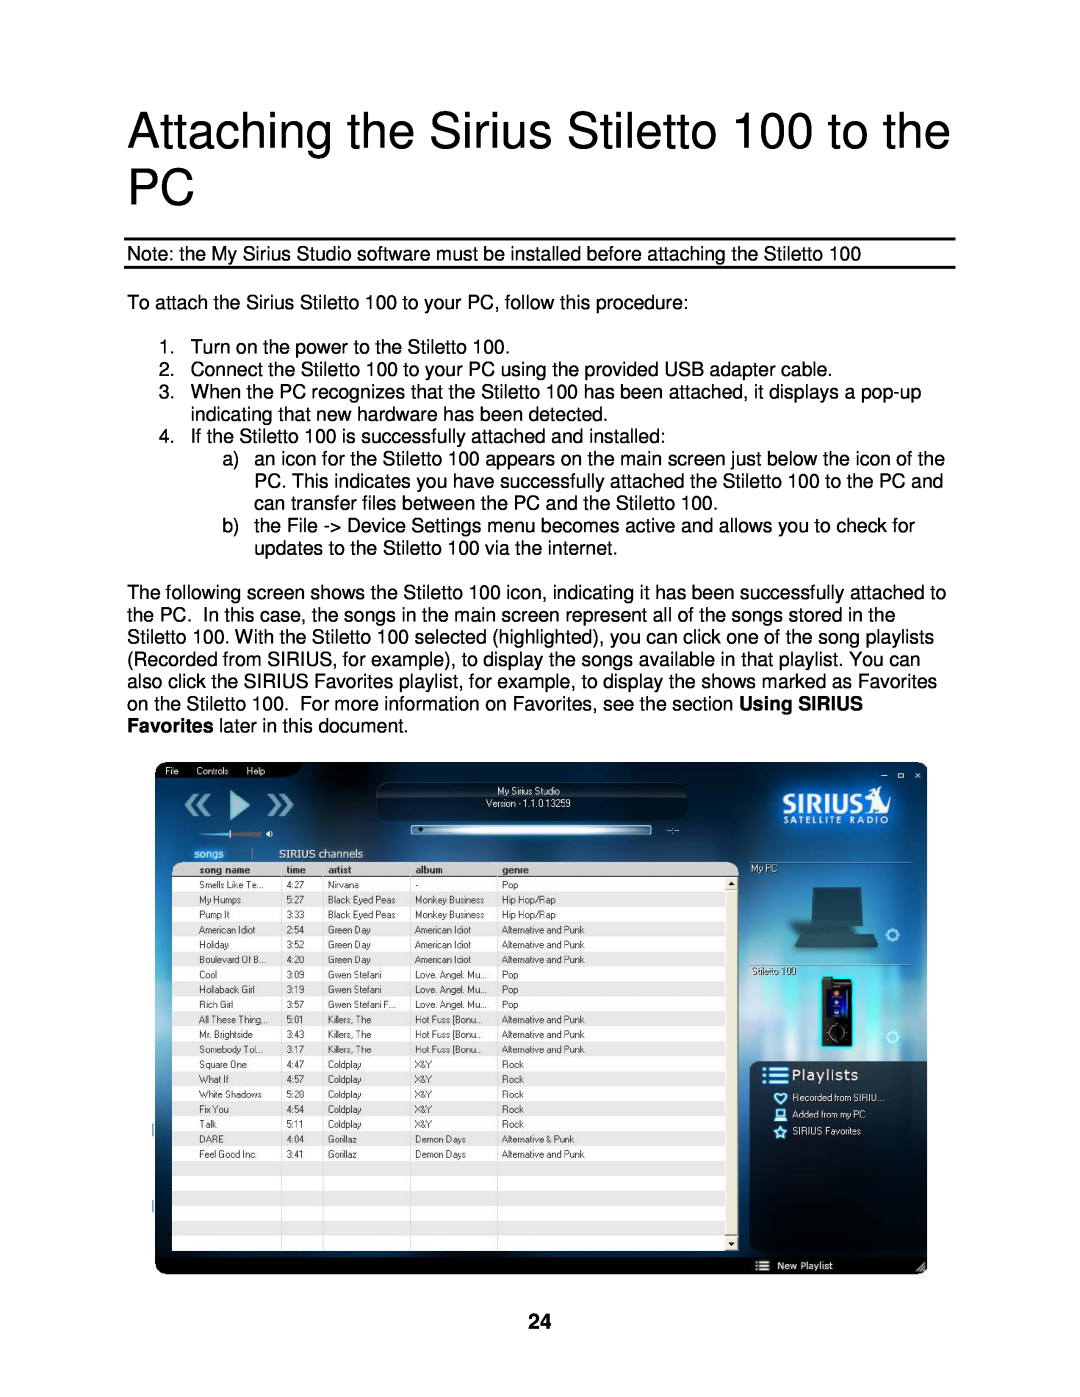 Sirius Satellite Radio manual Attaching the Sirius Stiletto 100 to the PC 